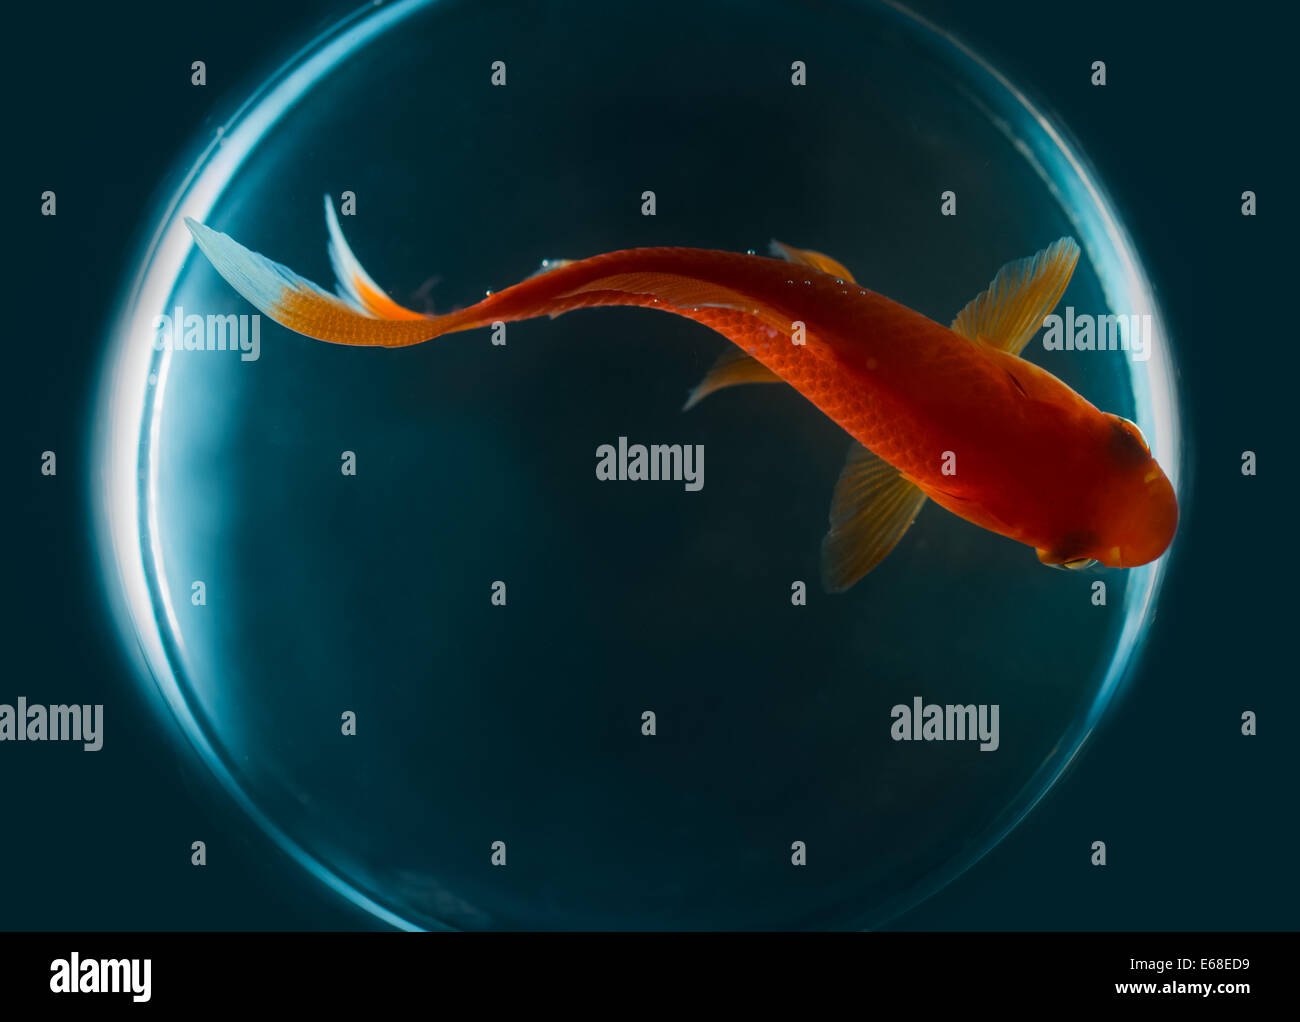 Gold fish aquarium top view hi-res stock photography and images - Alamy